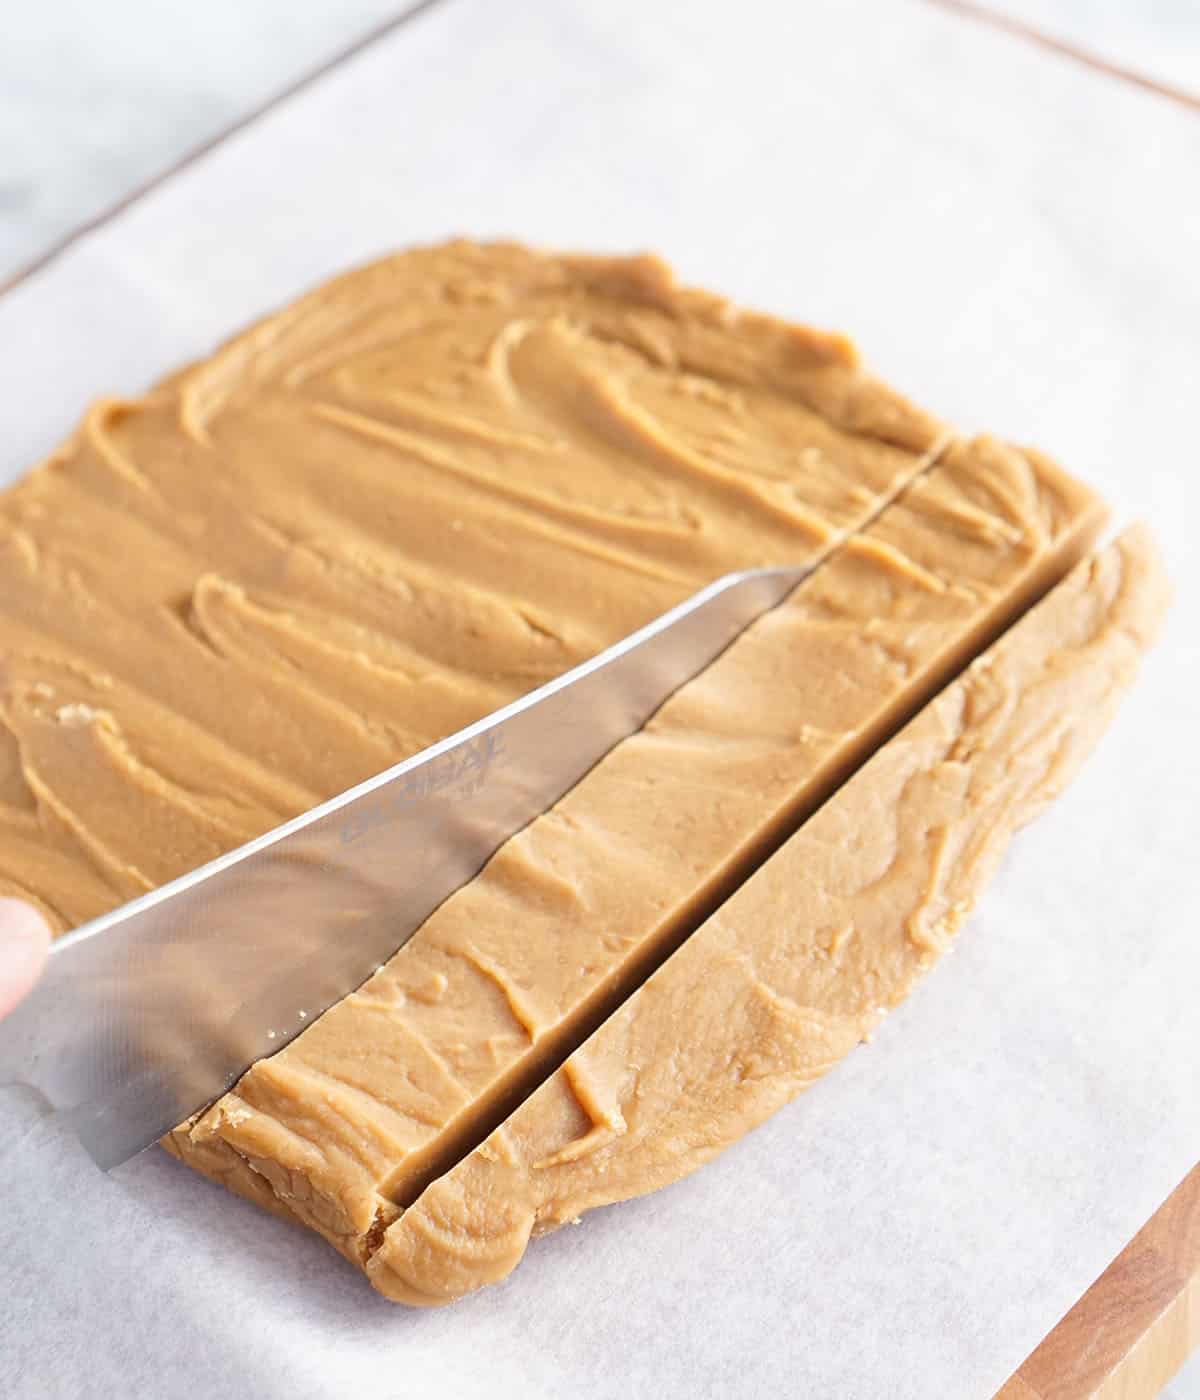 Peanut butter fudge getting cut into squares.